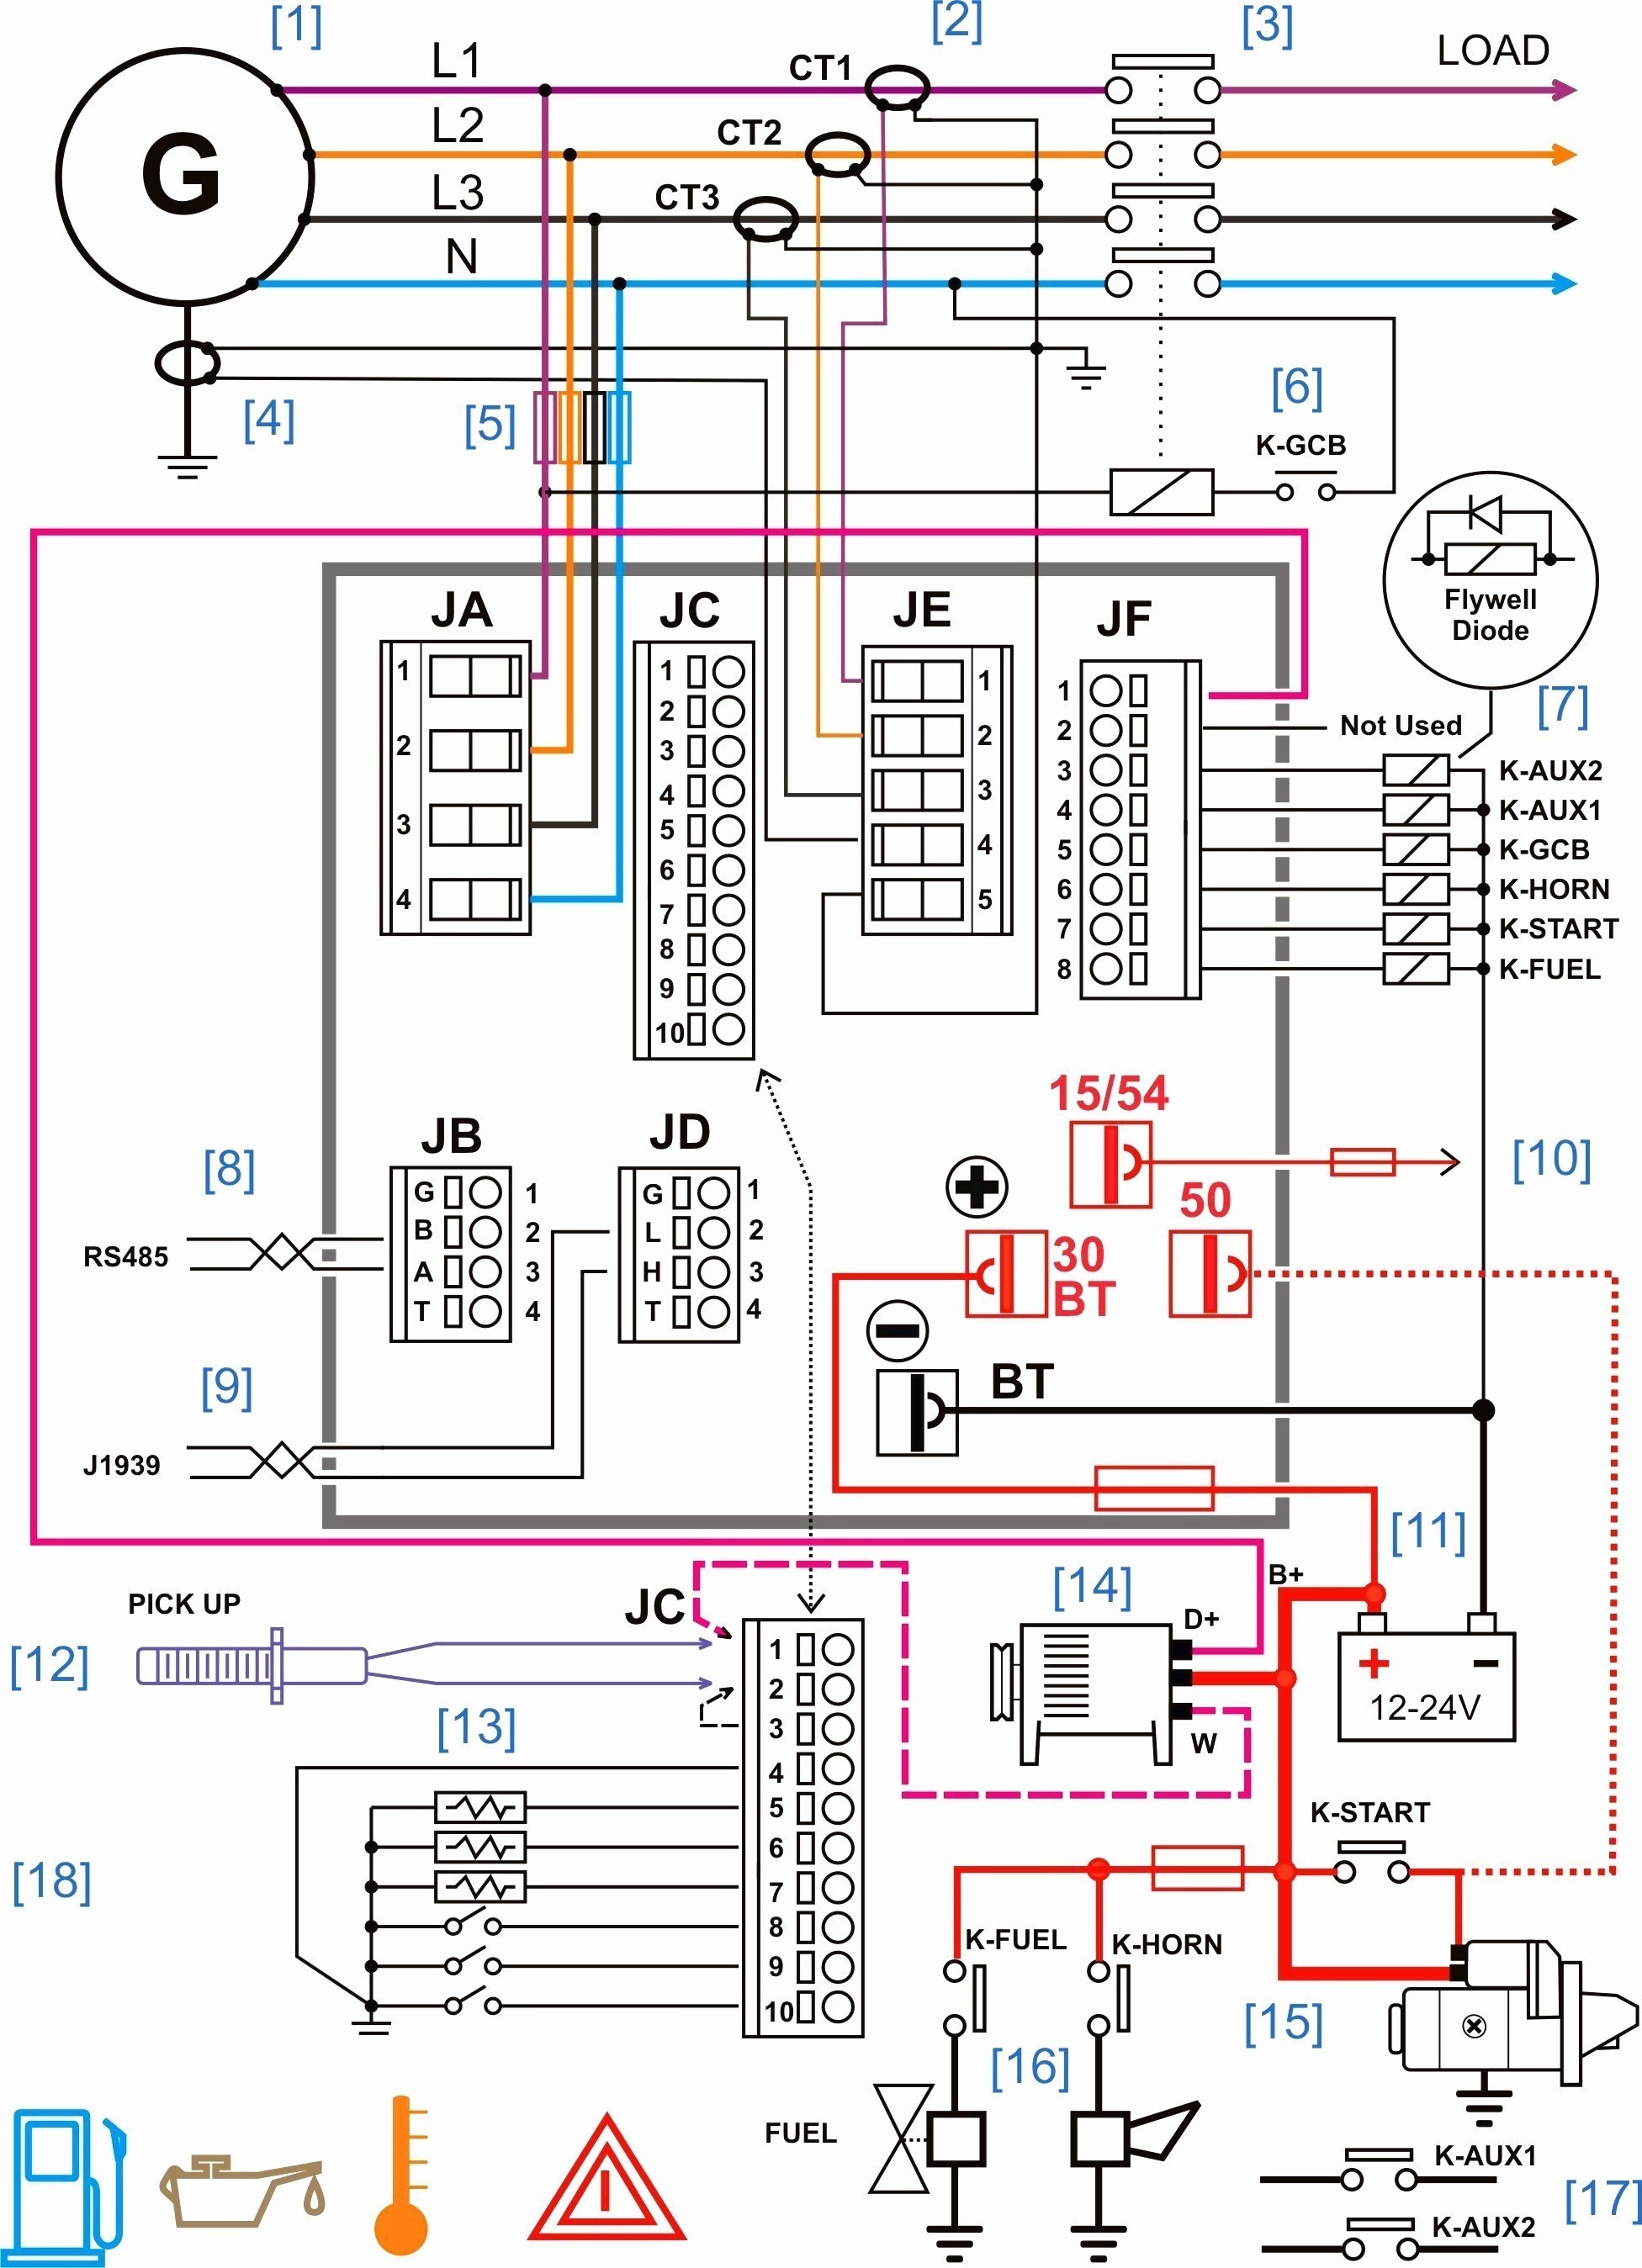 Basic Car Wiring Diagram Save Audi A4 Cd Player Wiring Diagram Of Basic Car Wiring Diagram